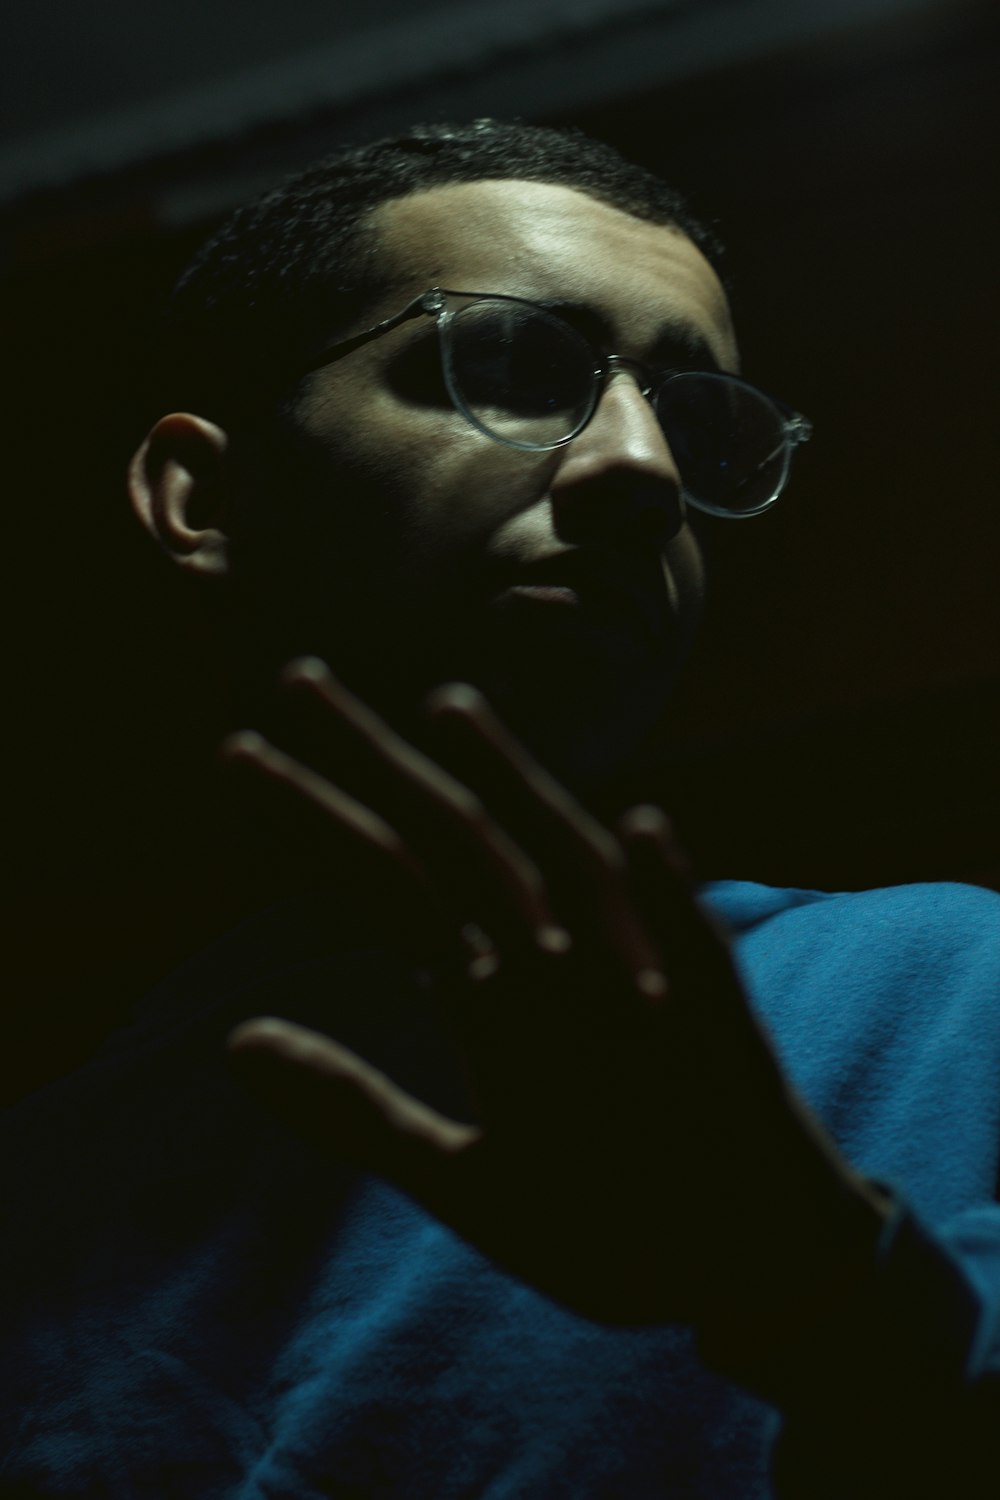 a man in a blue shirt wearing sunglasses